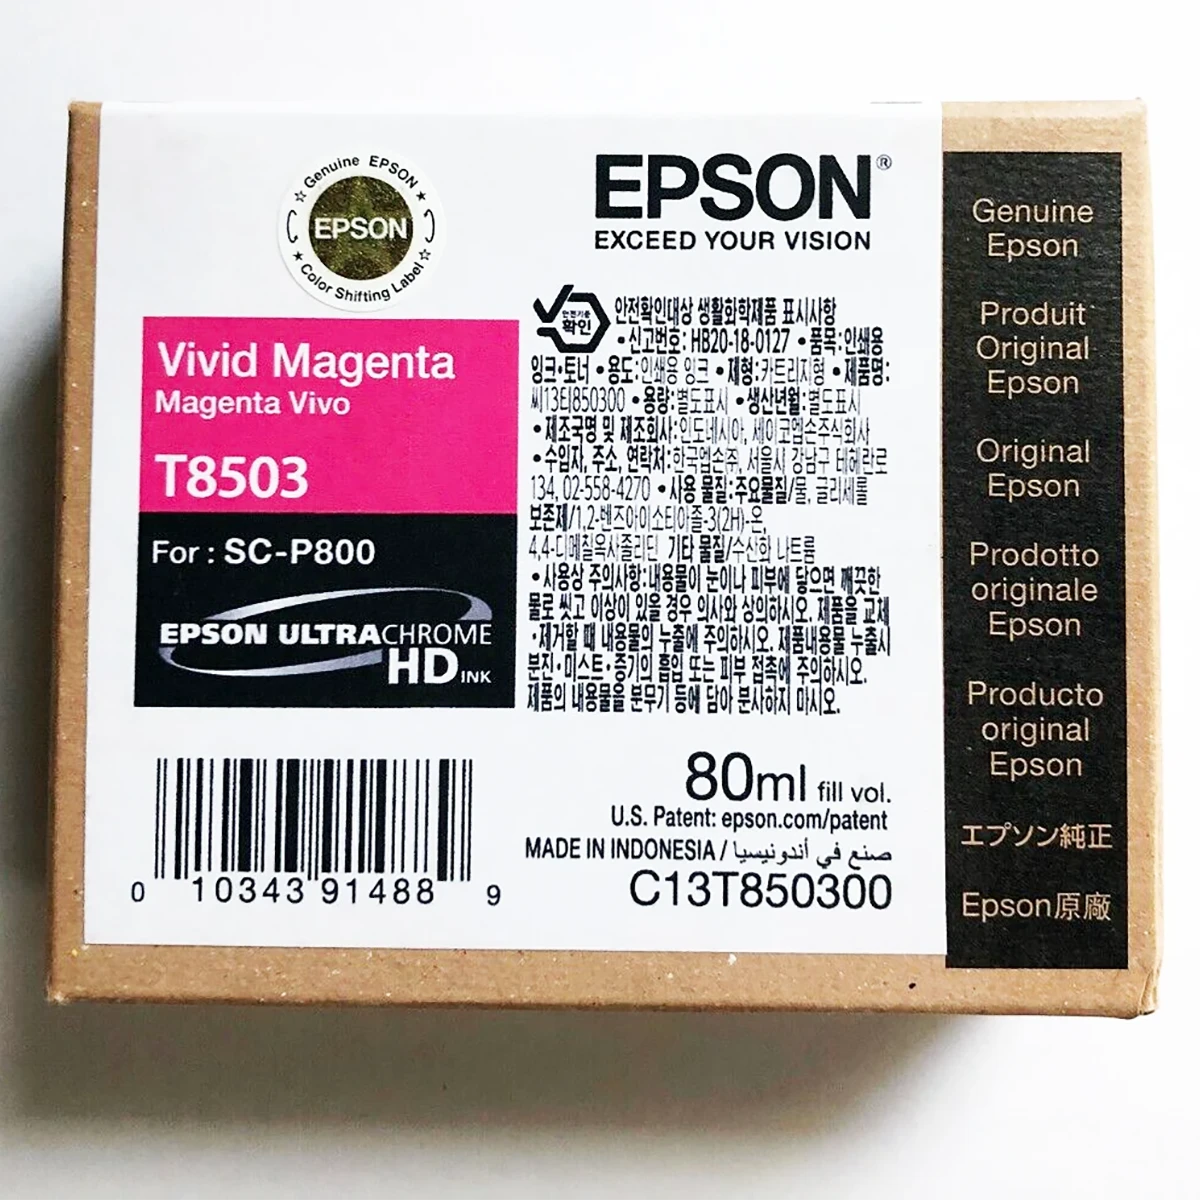 Epson P800 Printer T8503 Vivid Magenta Ink